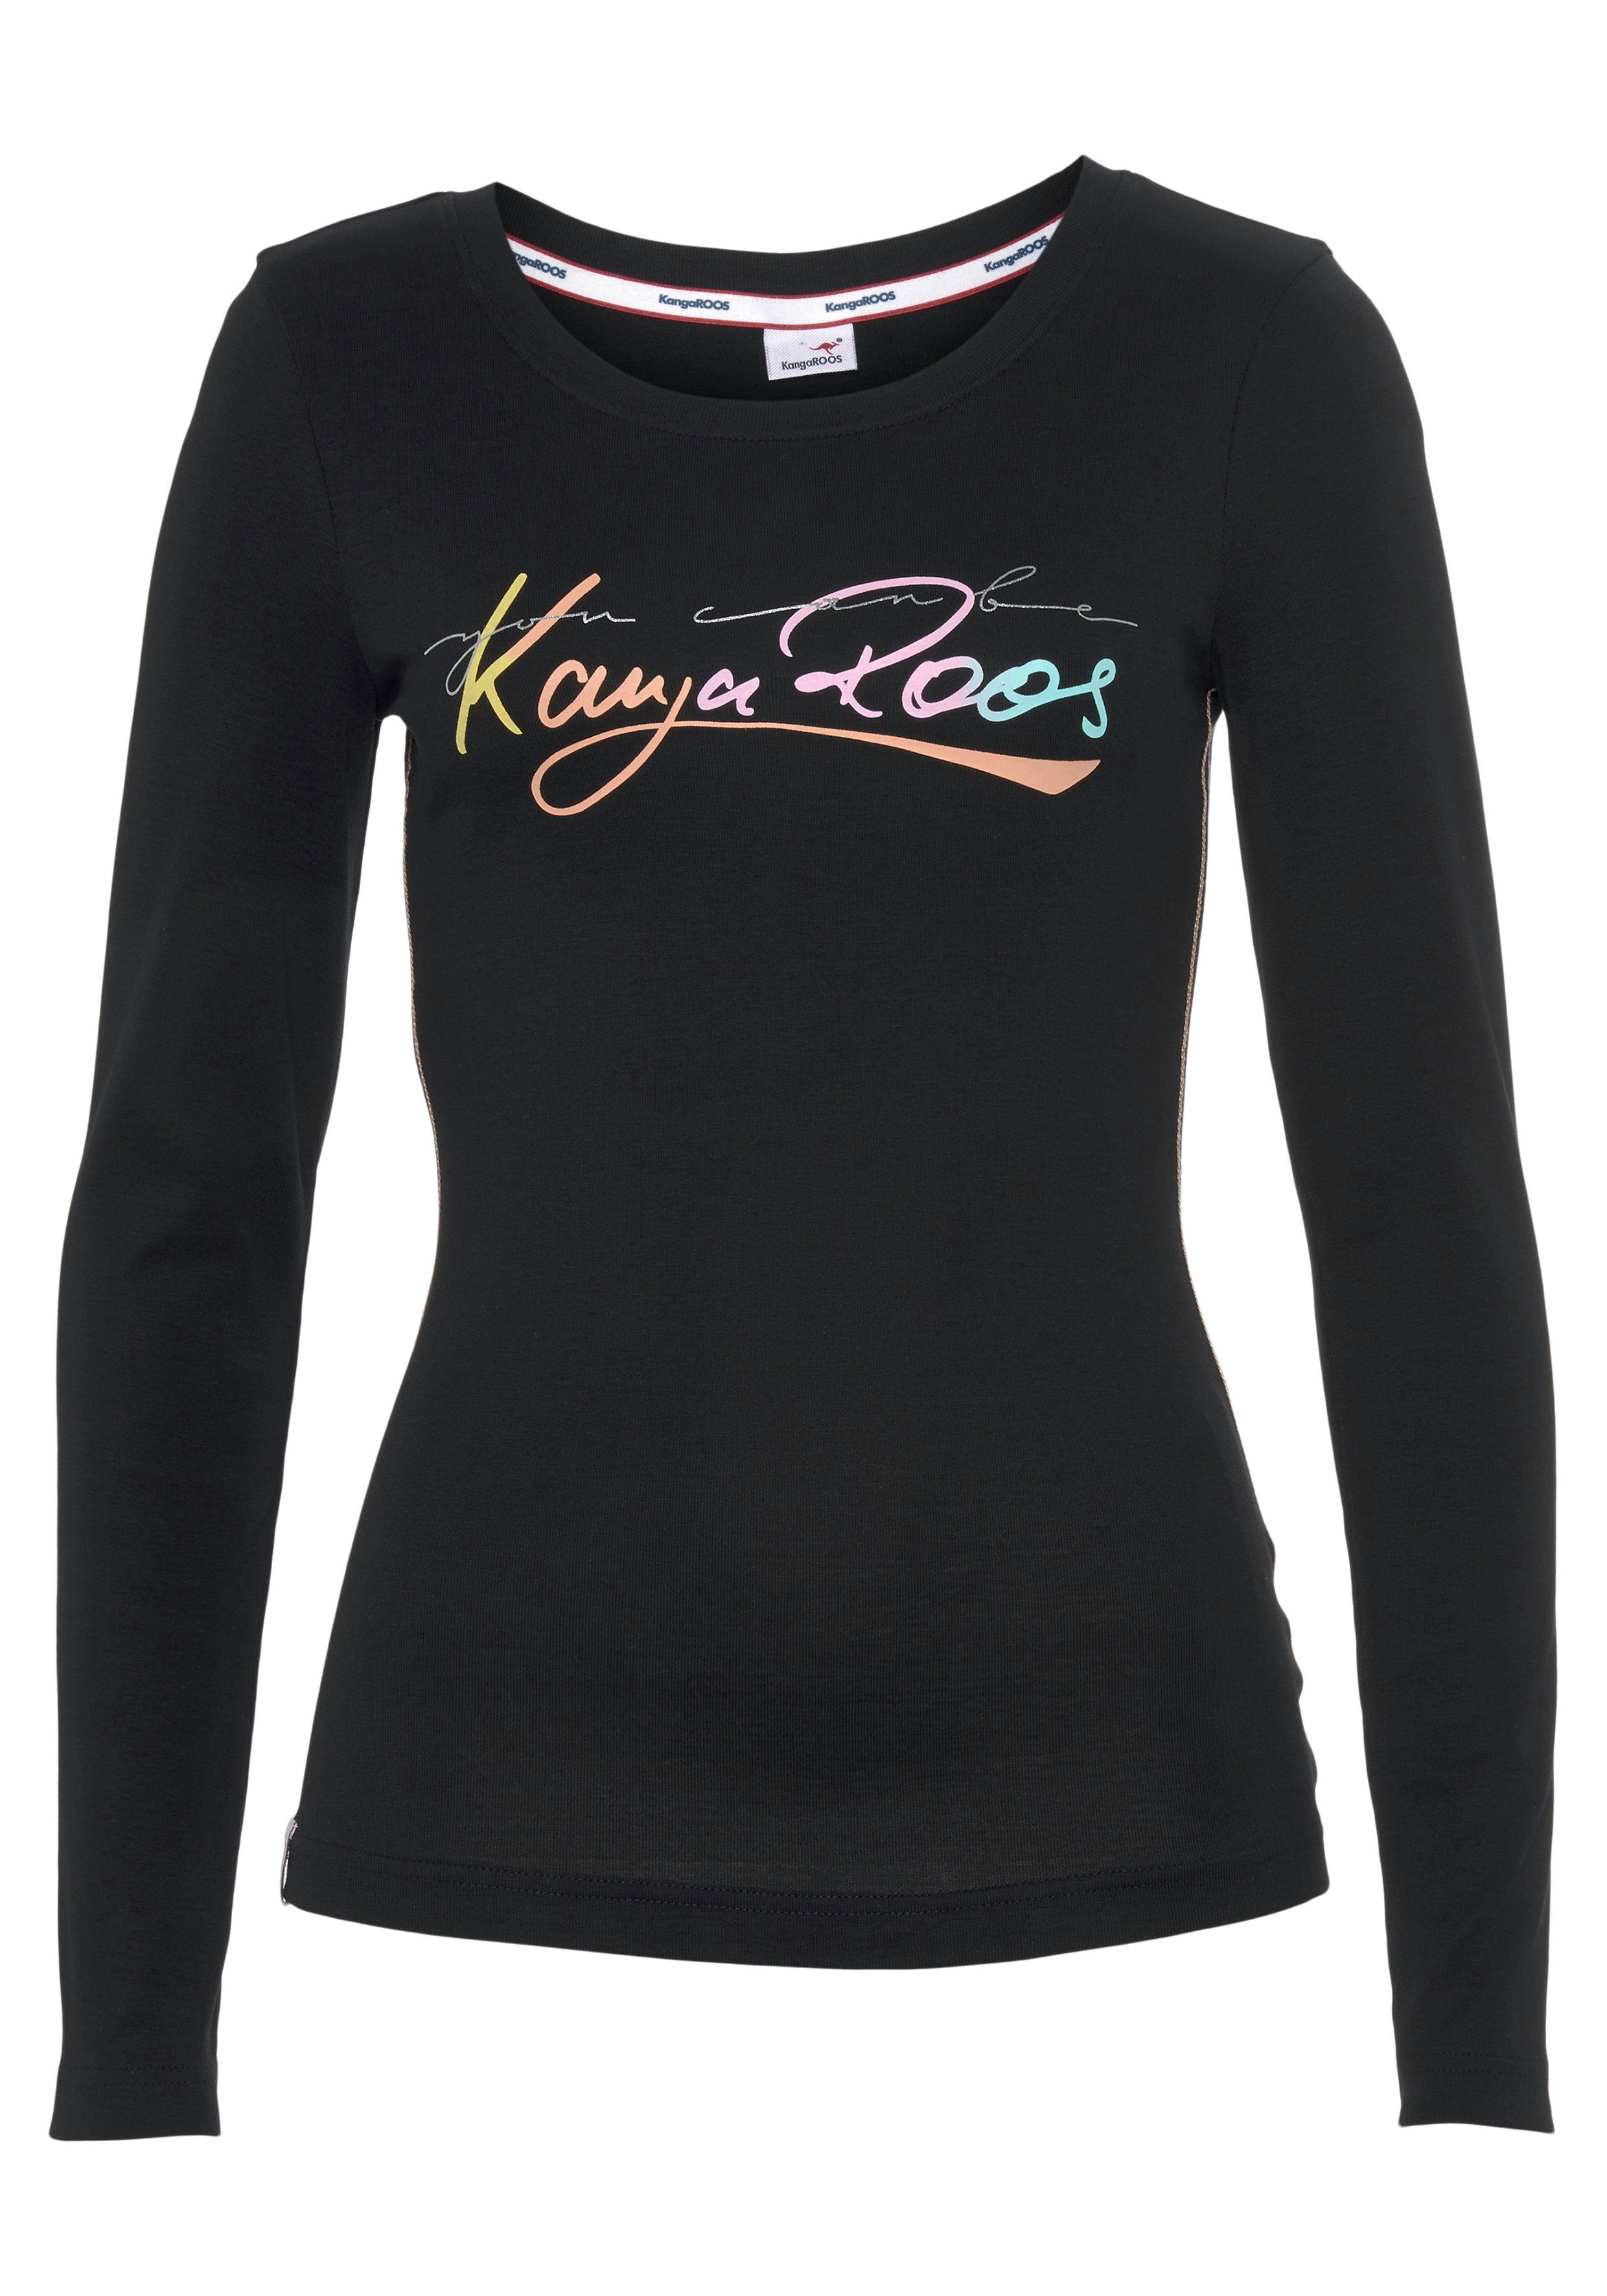 KangaROOS Langarmshirt mit farbigen - KOLLEKTION Logoschriftzug trendig NEUE schwarz